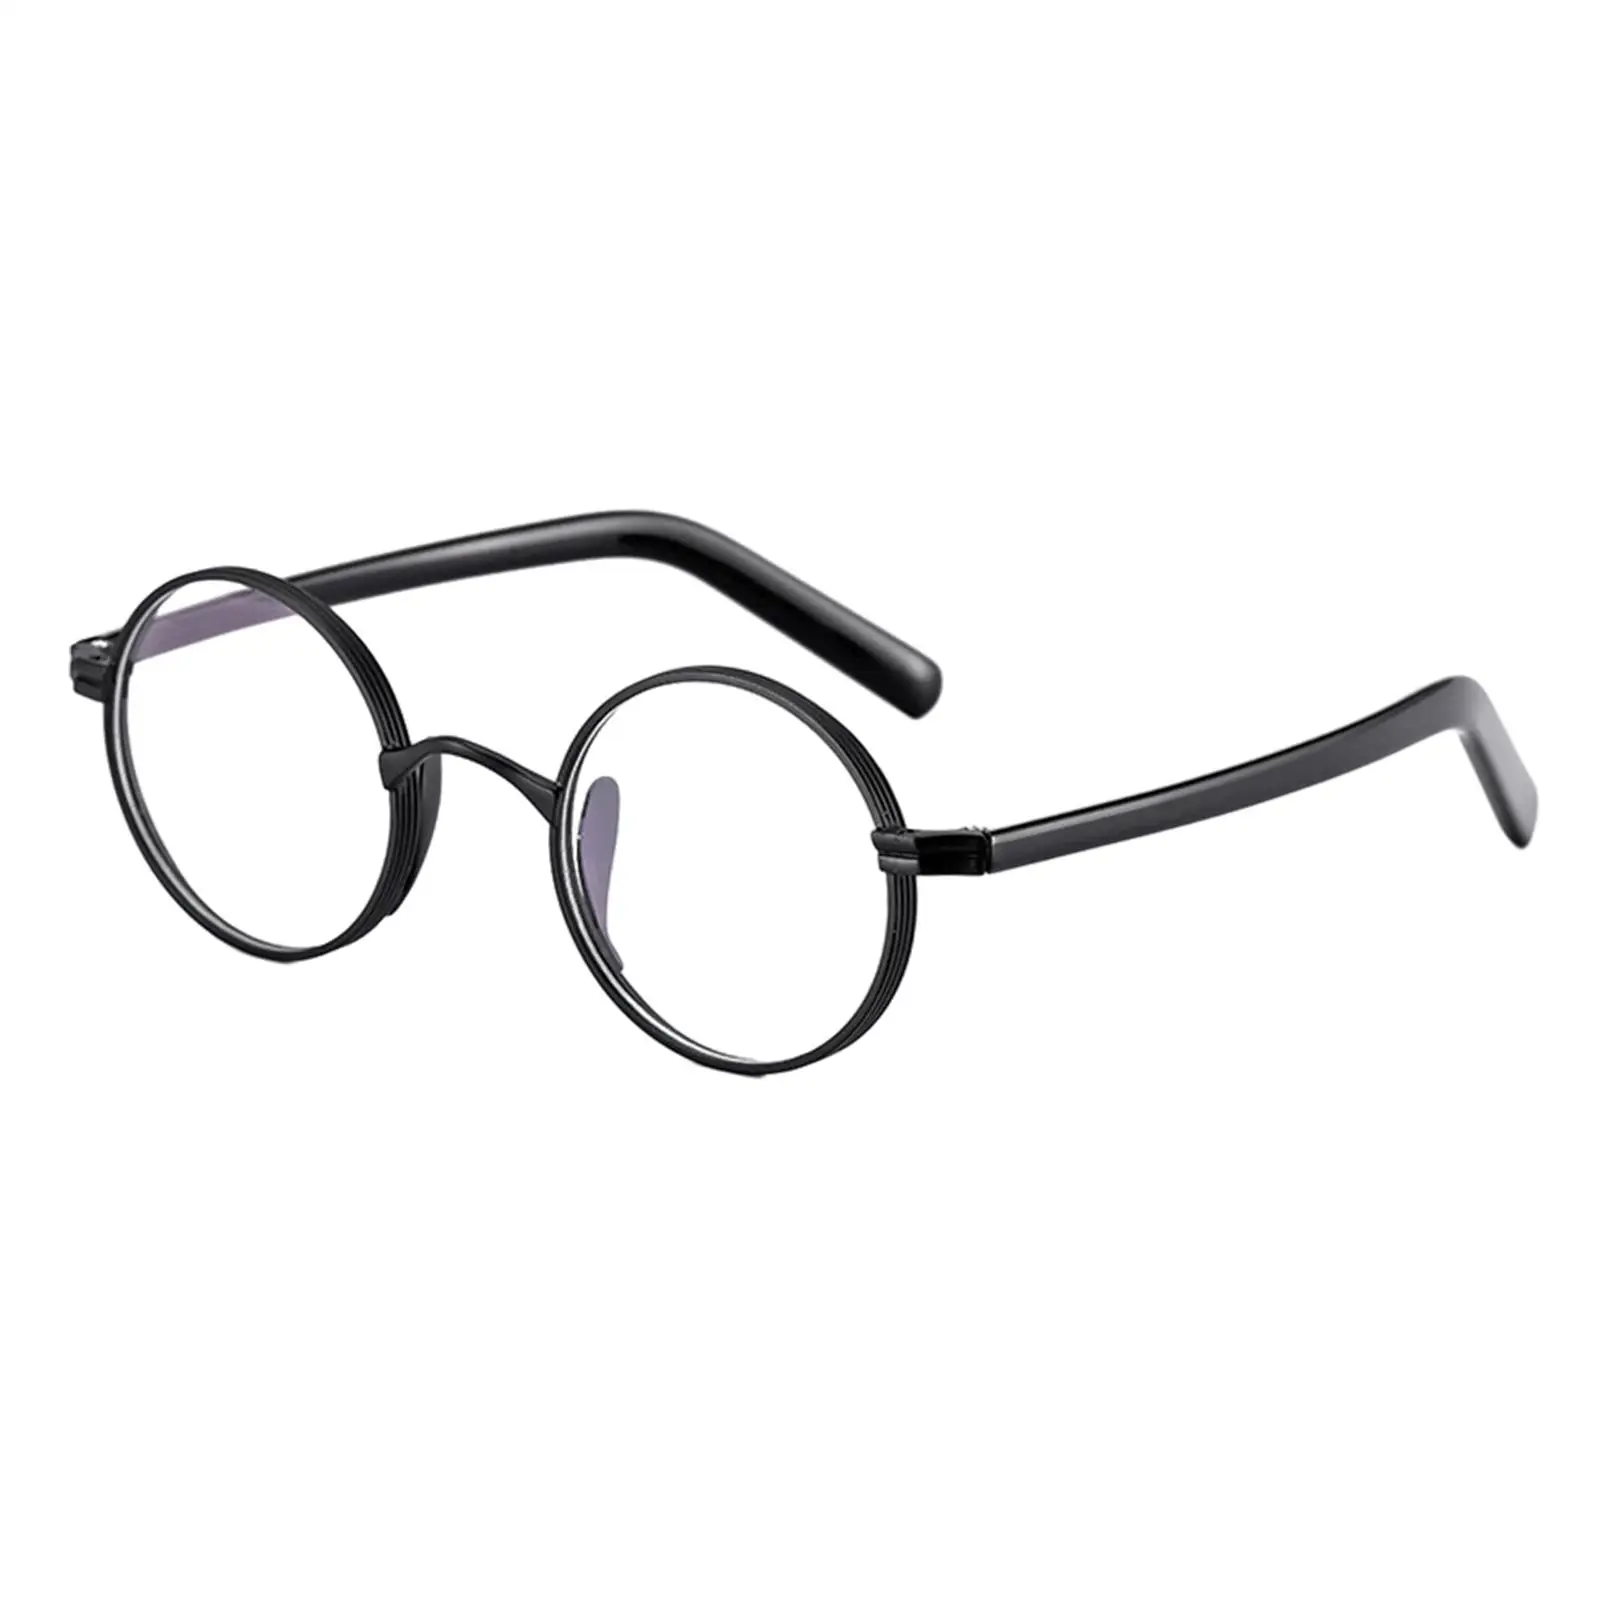 Glasses Frames Eyewear Frames Oval for Women Men, Classical Retro Lightweight Titanium Alloy Eyeglass Frame Eyeglasses Frames